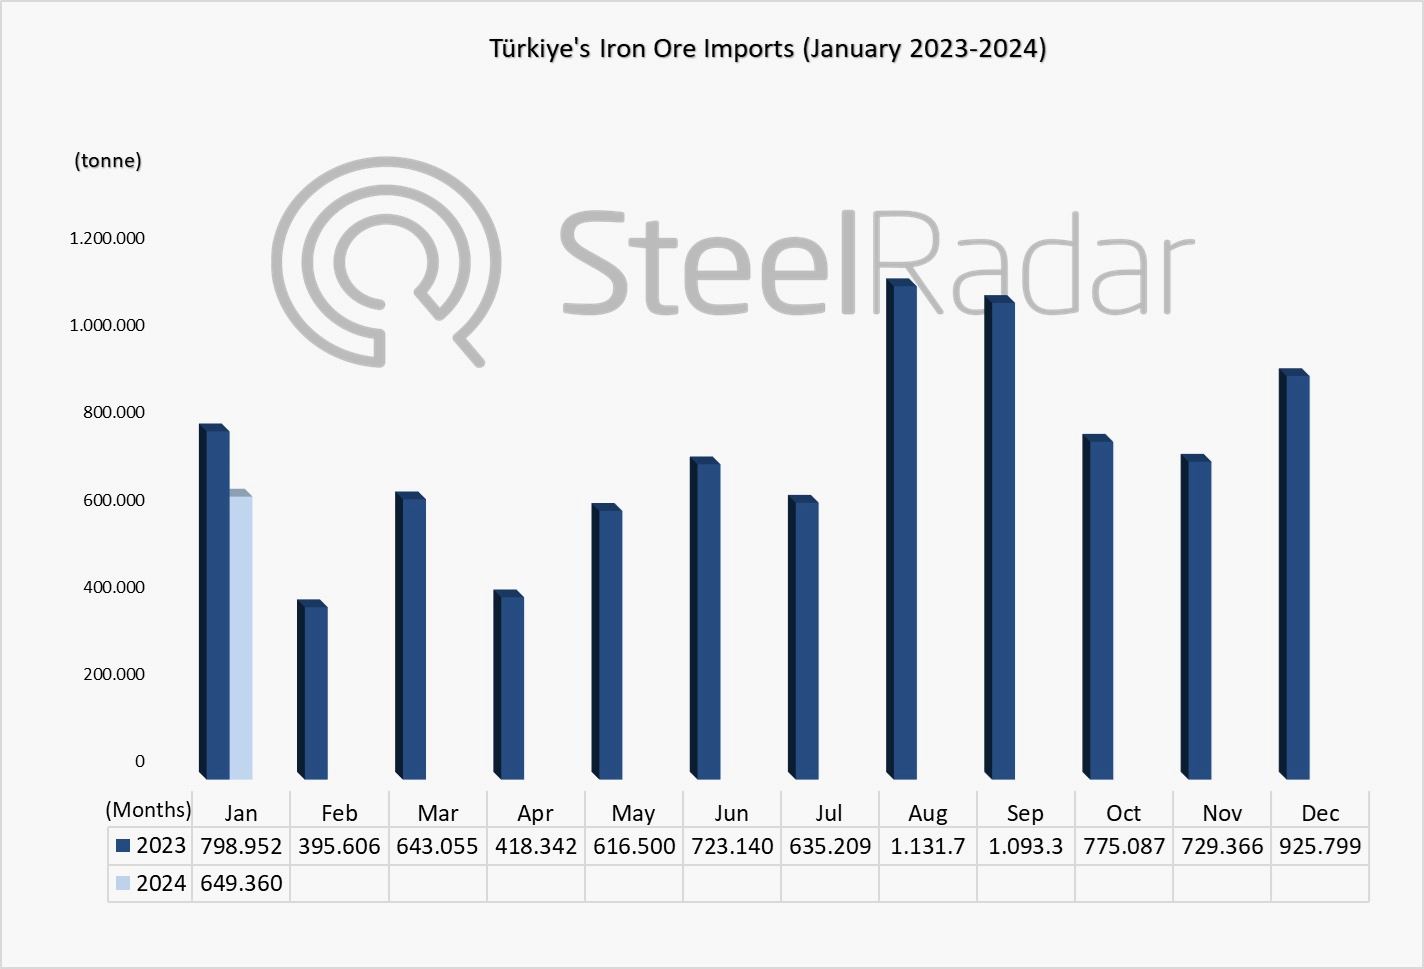 Türkiye's iron ore imports decreased by 18.72% in January